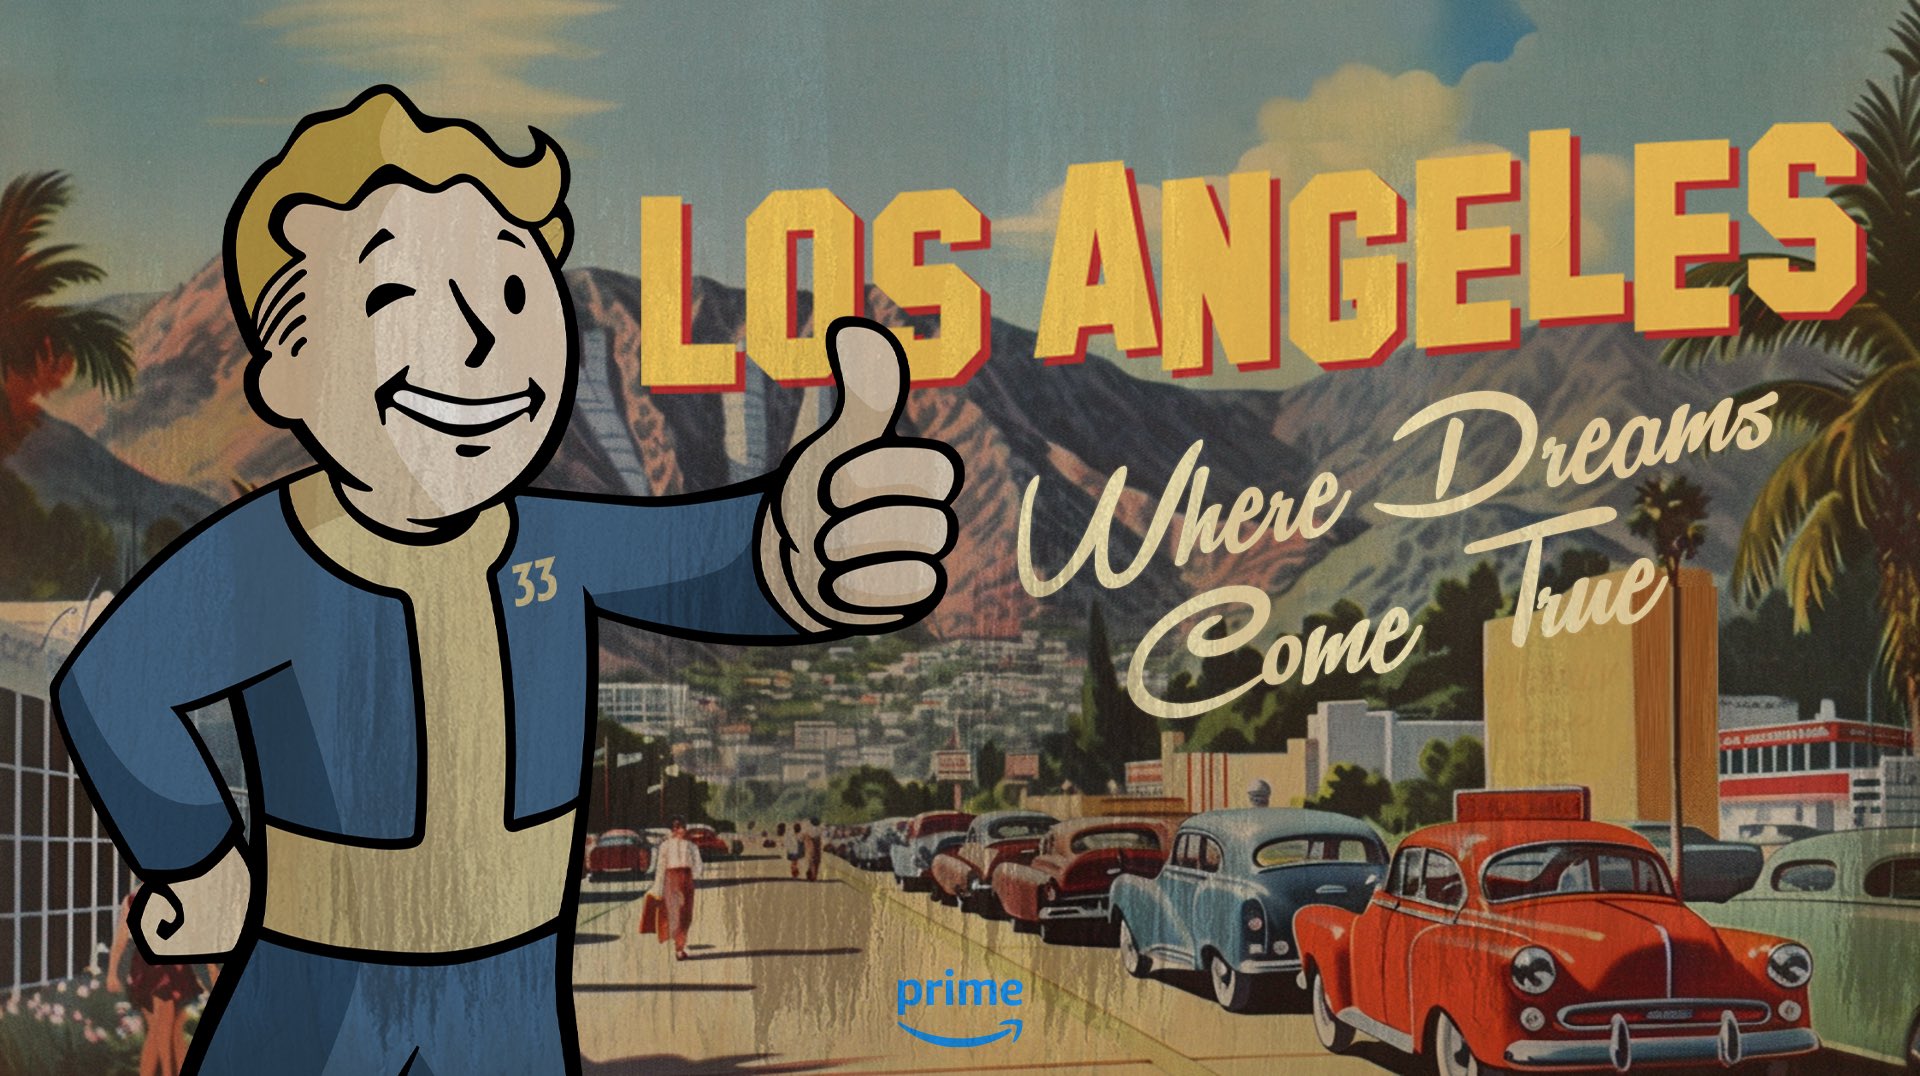 Amazon revela teaser de série liveaction de “Fallout”